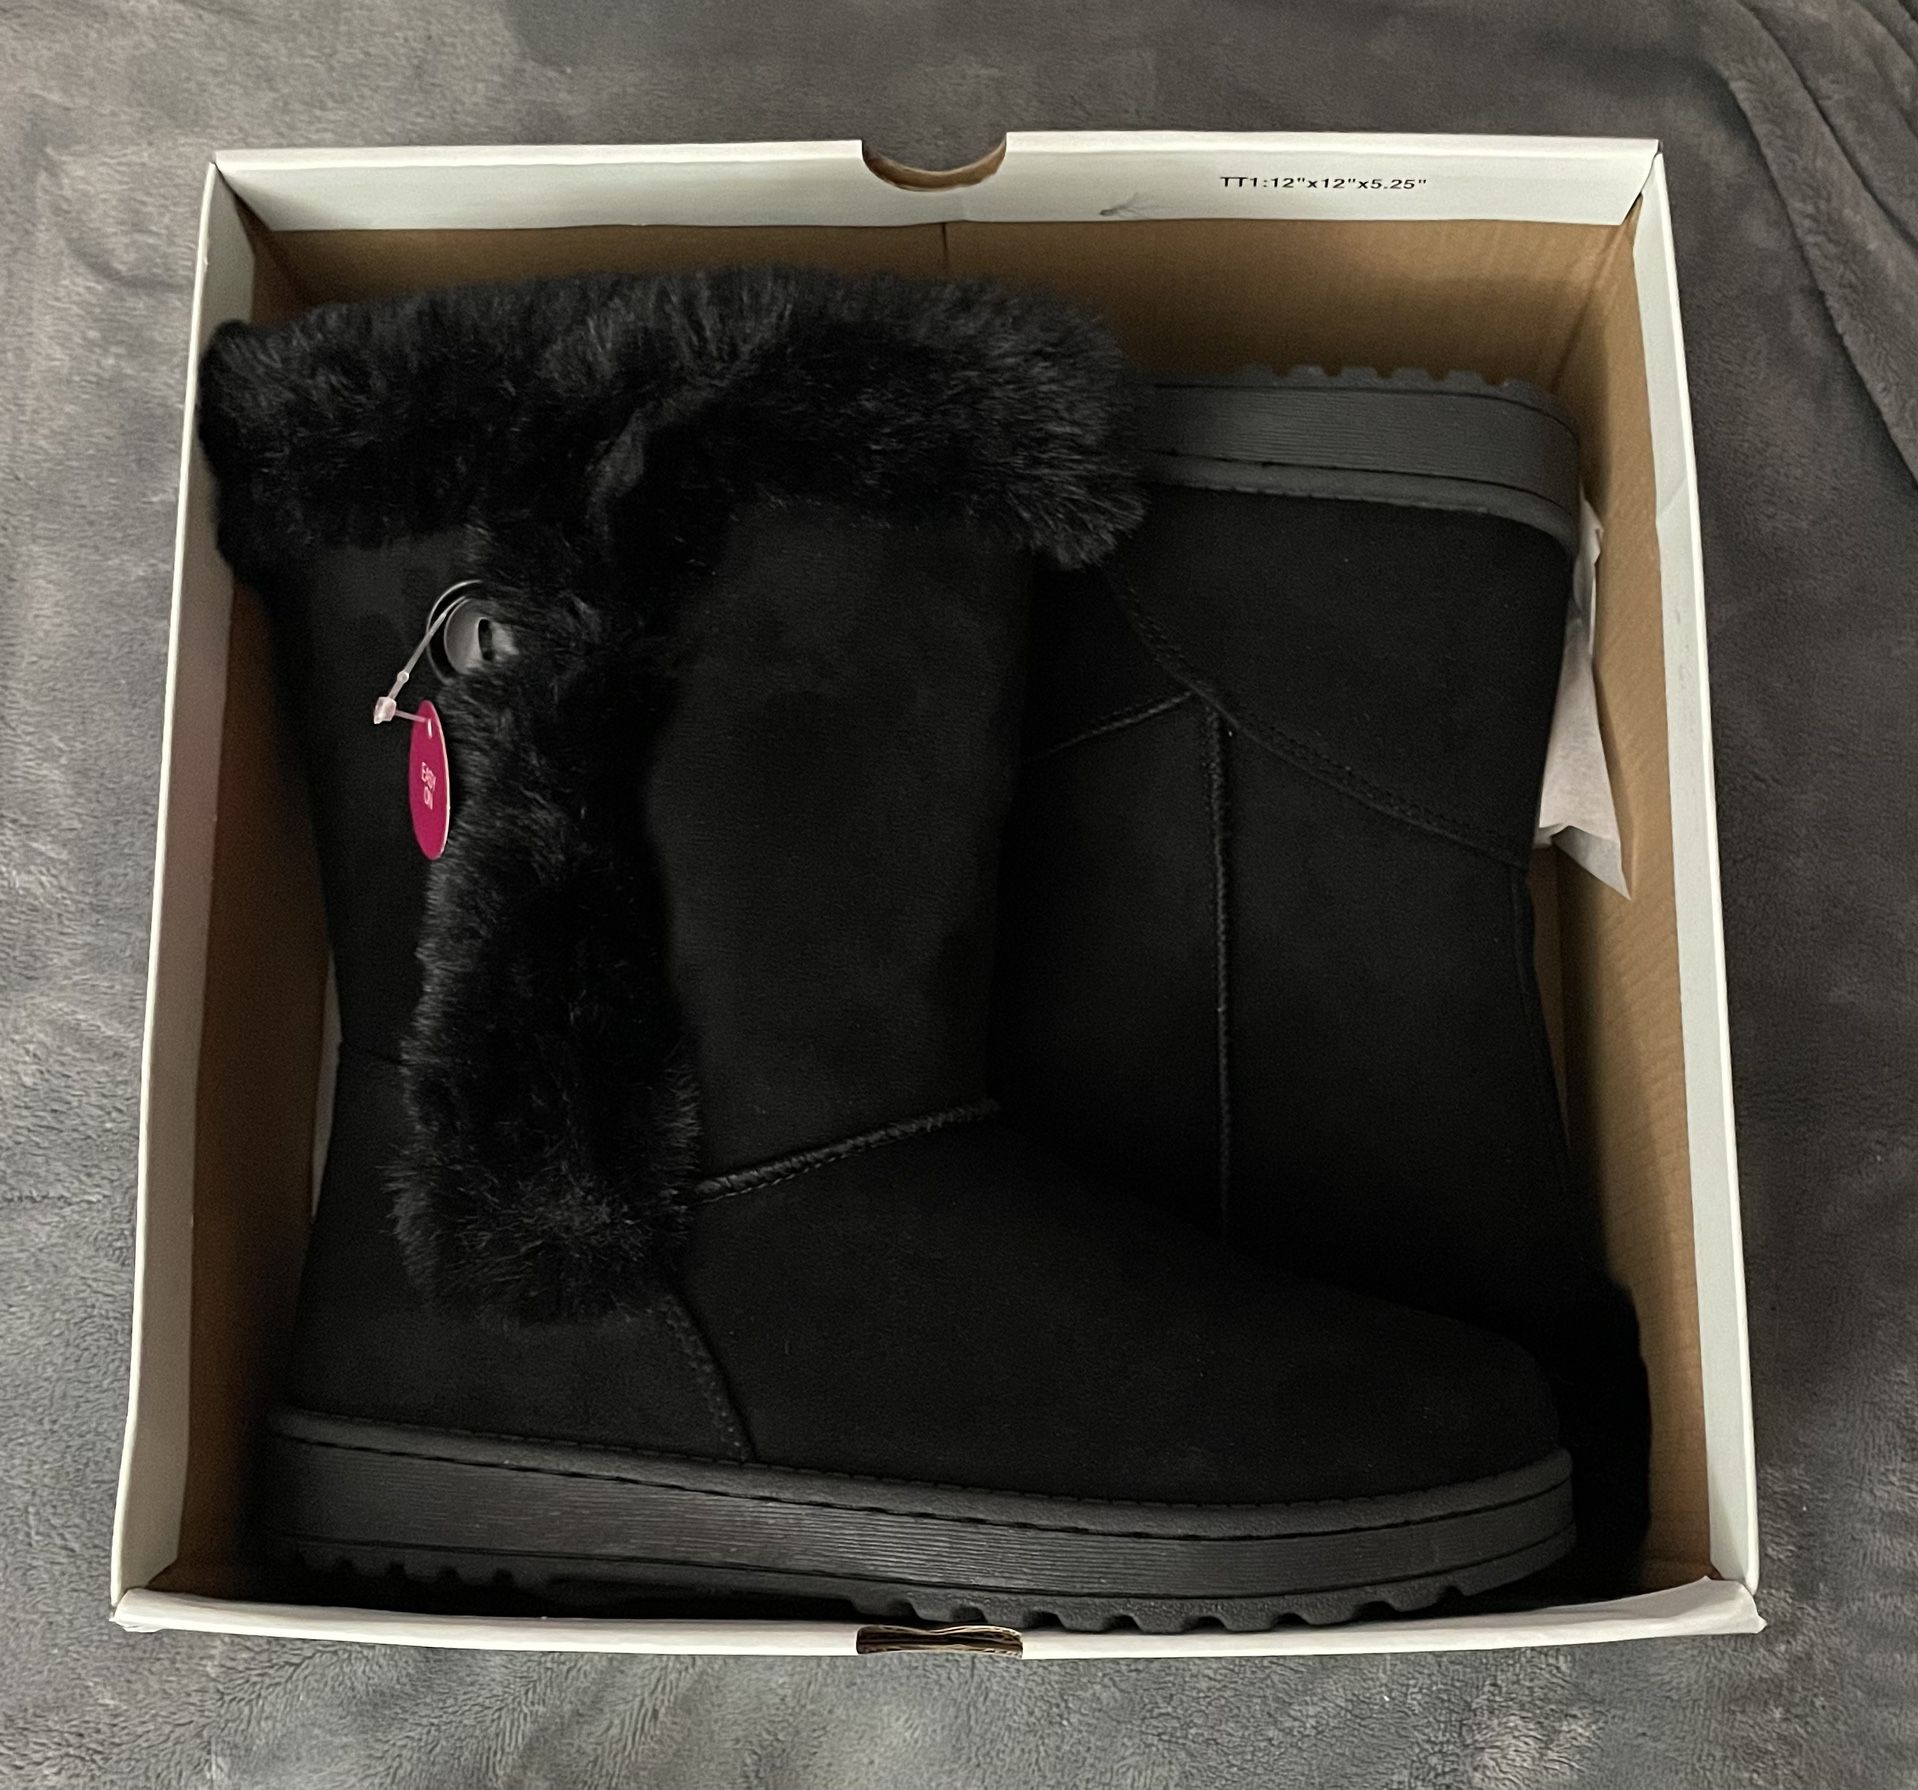 Winter Fur Boots